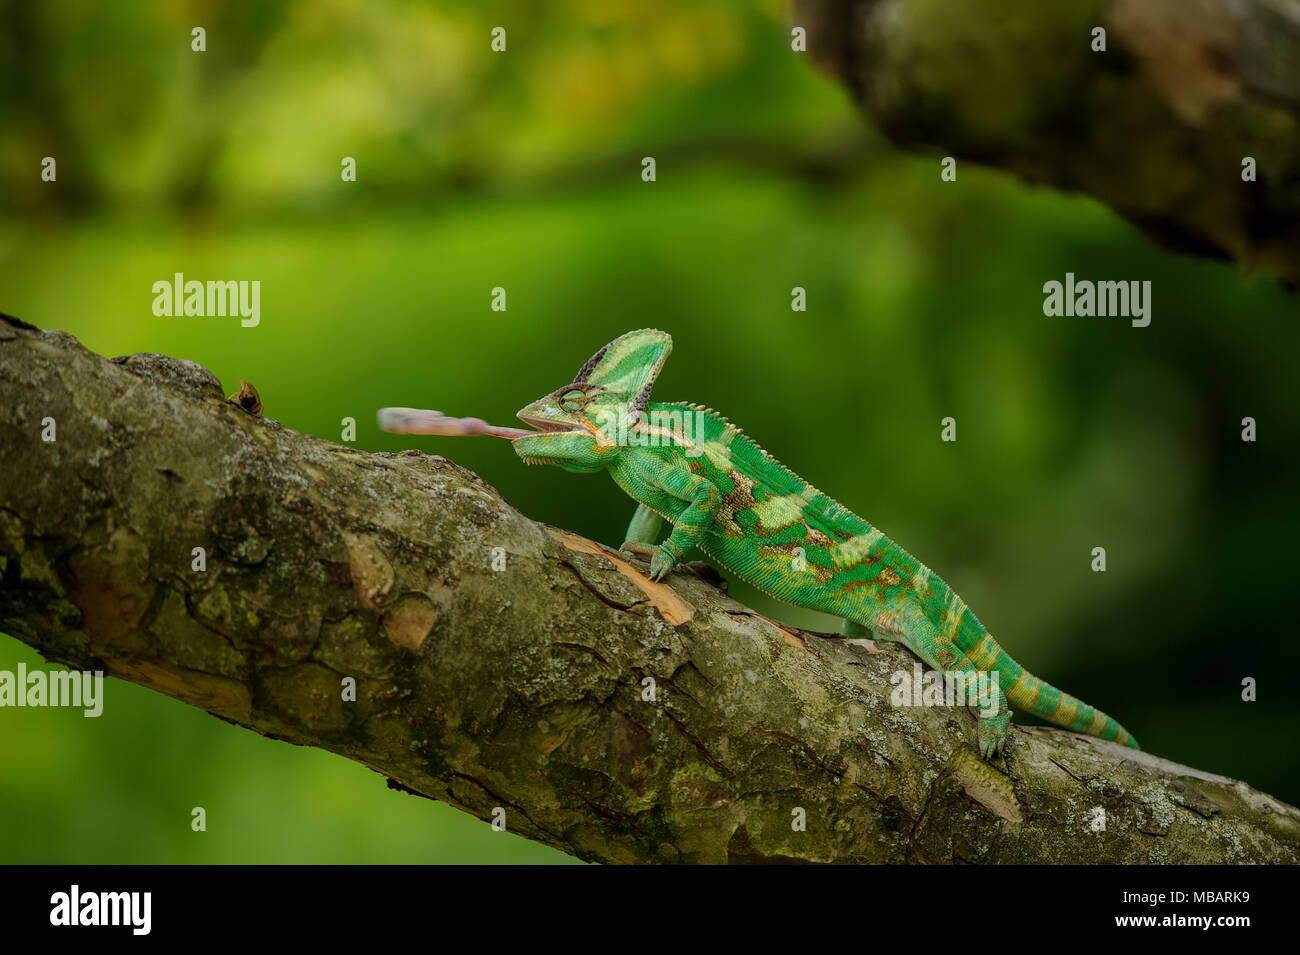 Chameleon on tree hunting home cricket Stock Photo